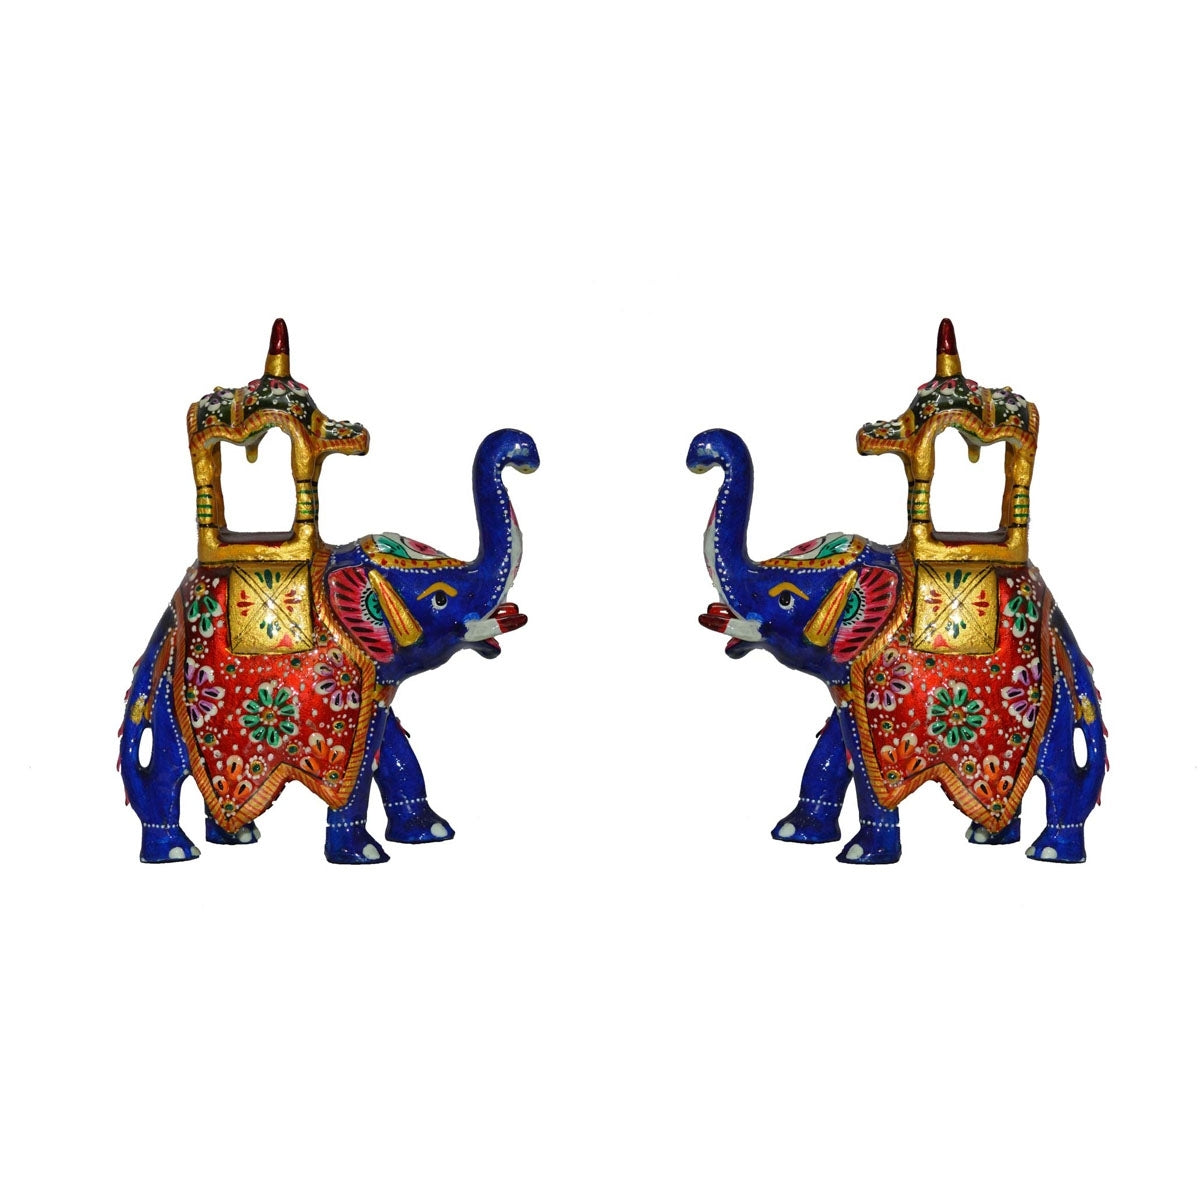 Combo of Meenakari Colorful Ambabari Elephant Statue